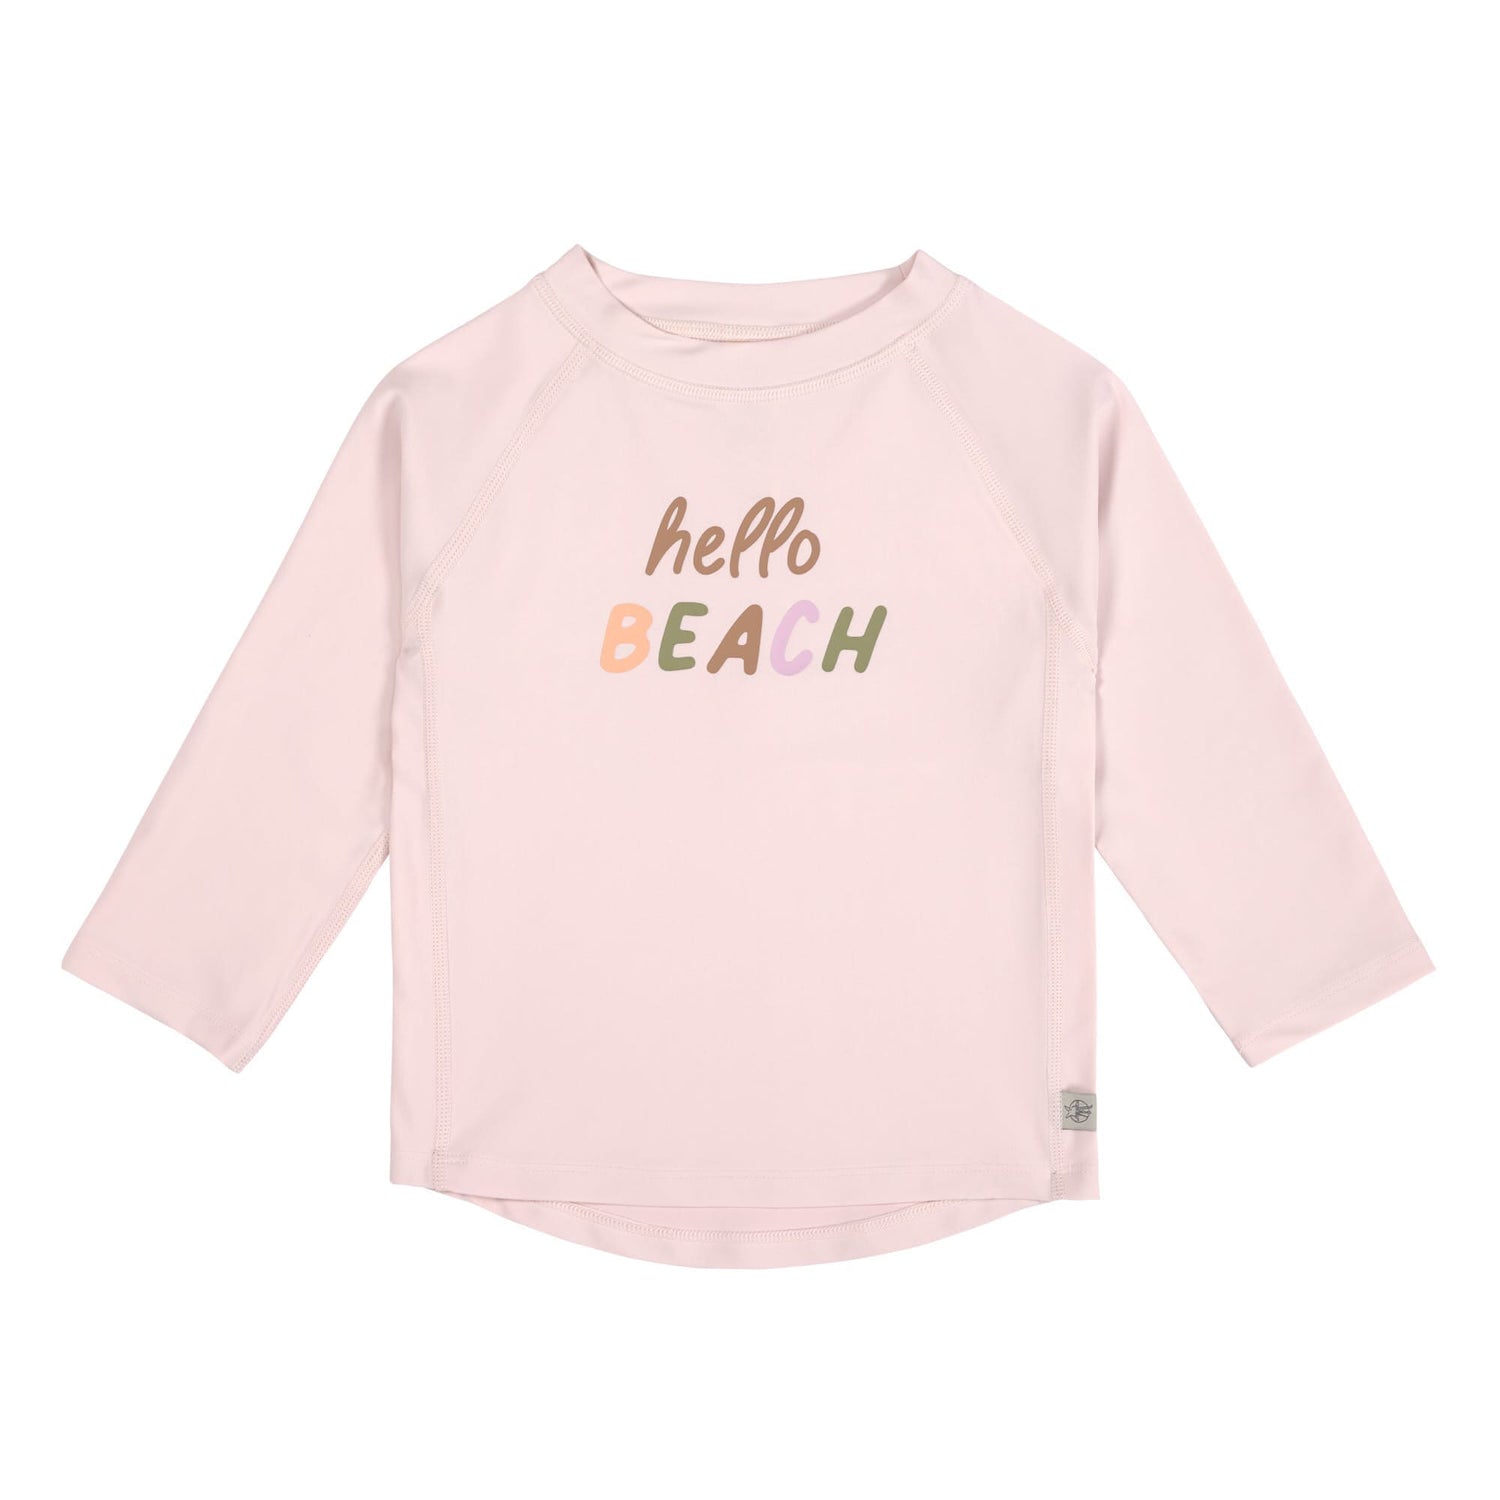 Lässig - Kinder Badeshirt langarm - UV Shirt rosa Hello Beach